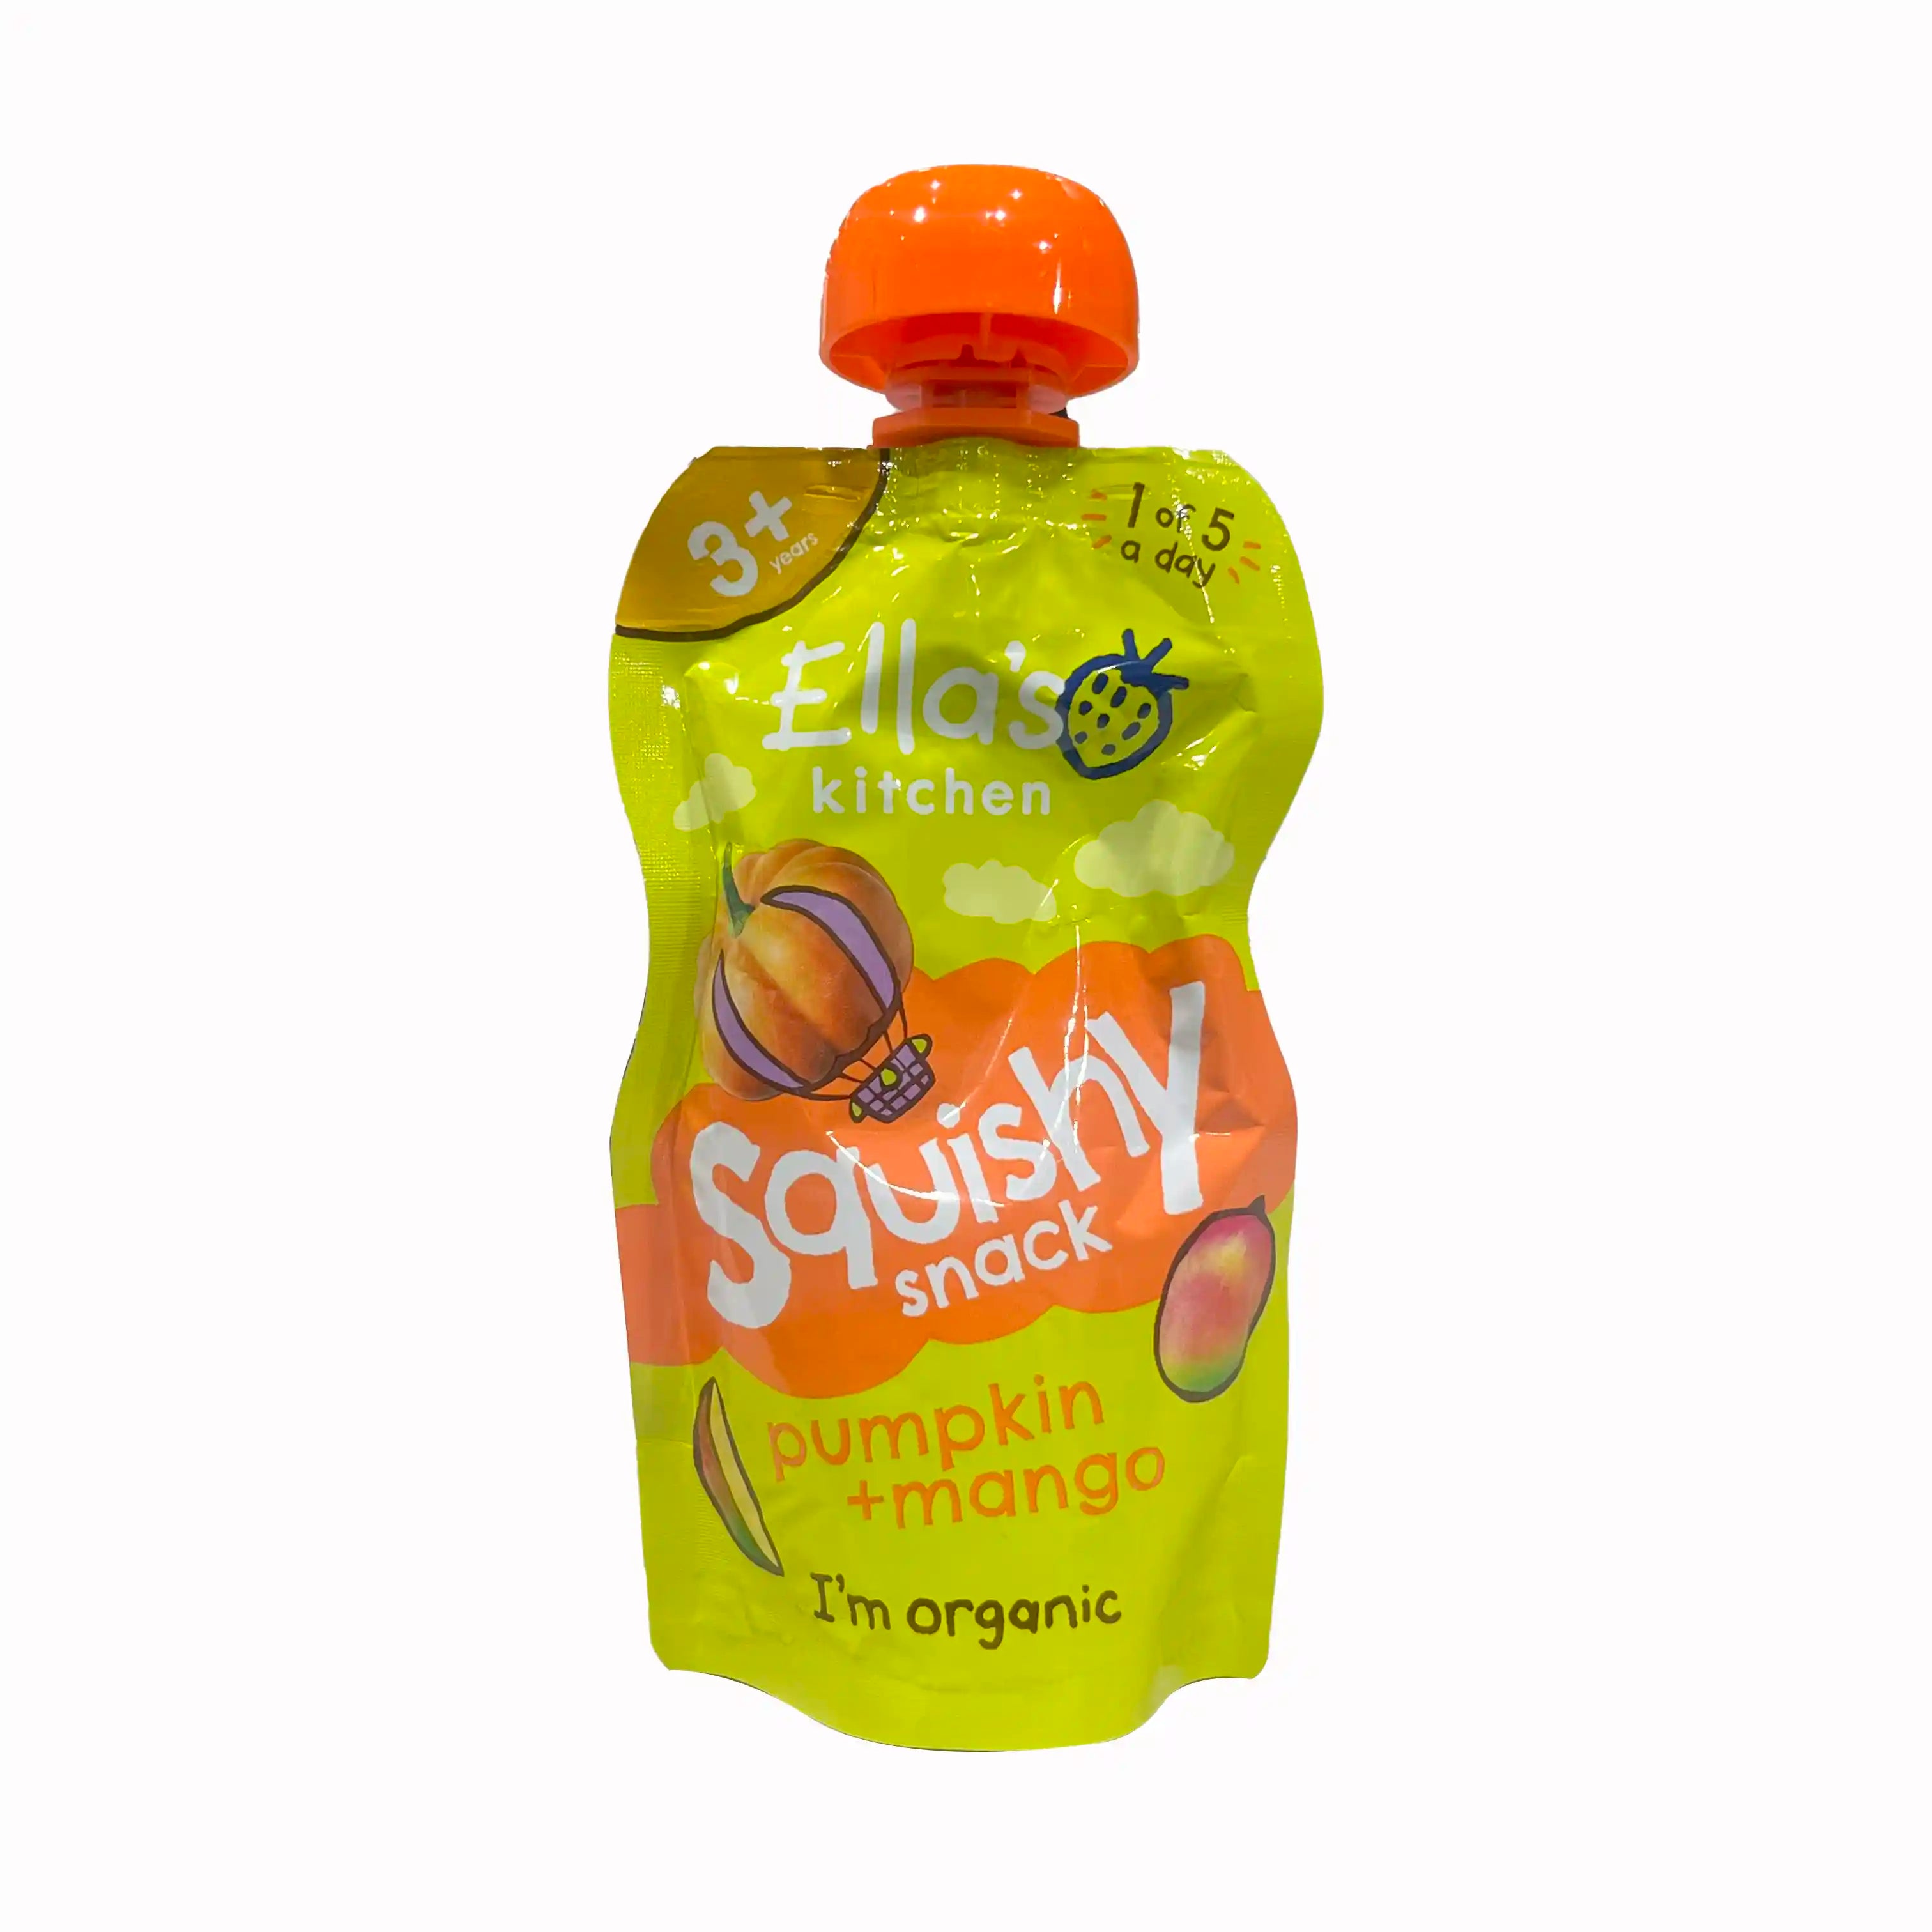 Buy Ella's Kitchen Organic Squishy Snack with Pumpkin & Mango for Children Online in India at uyyaala.com